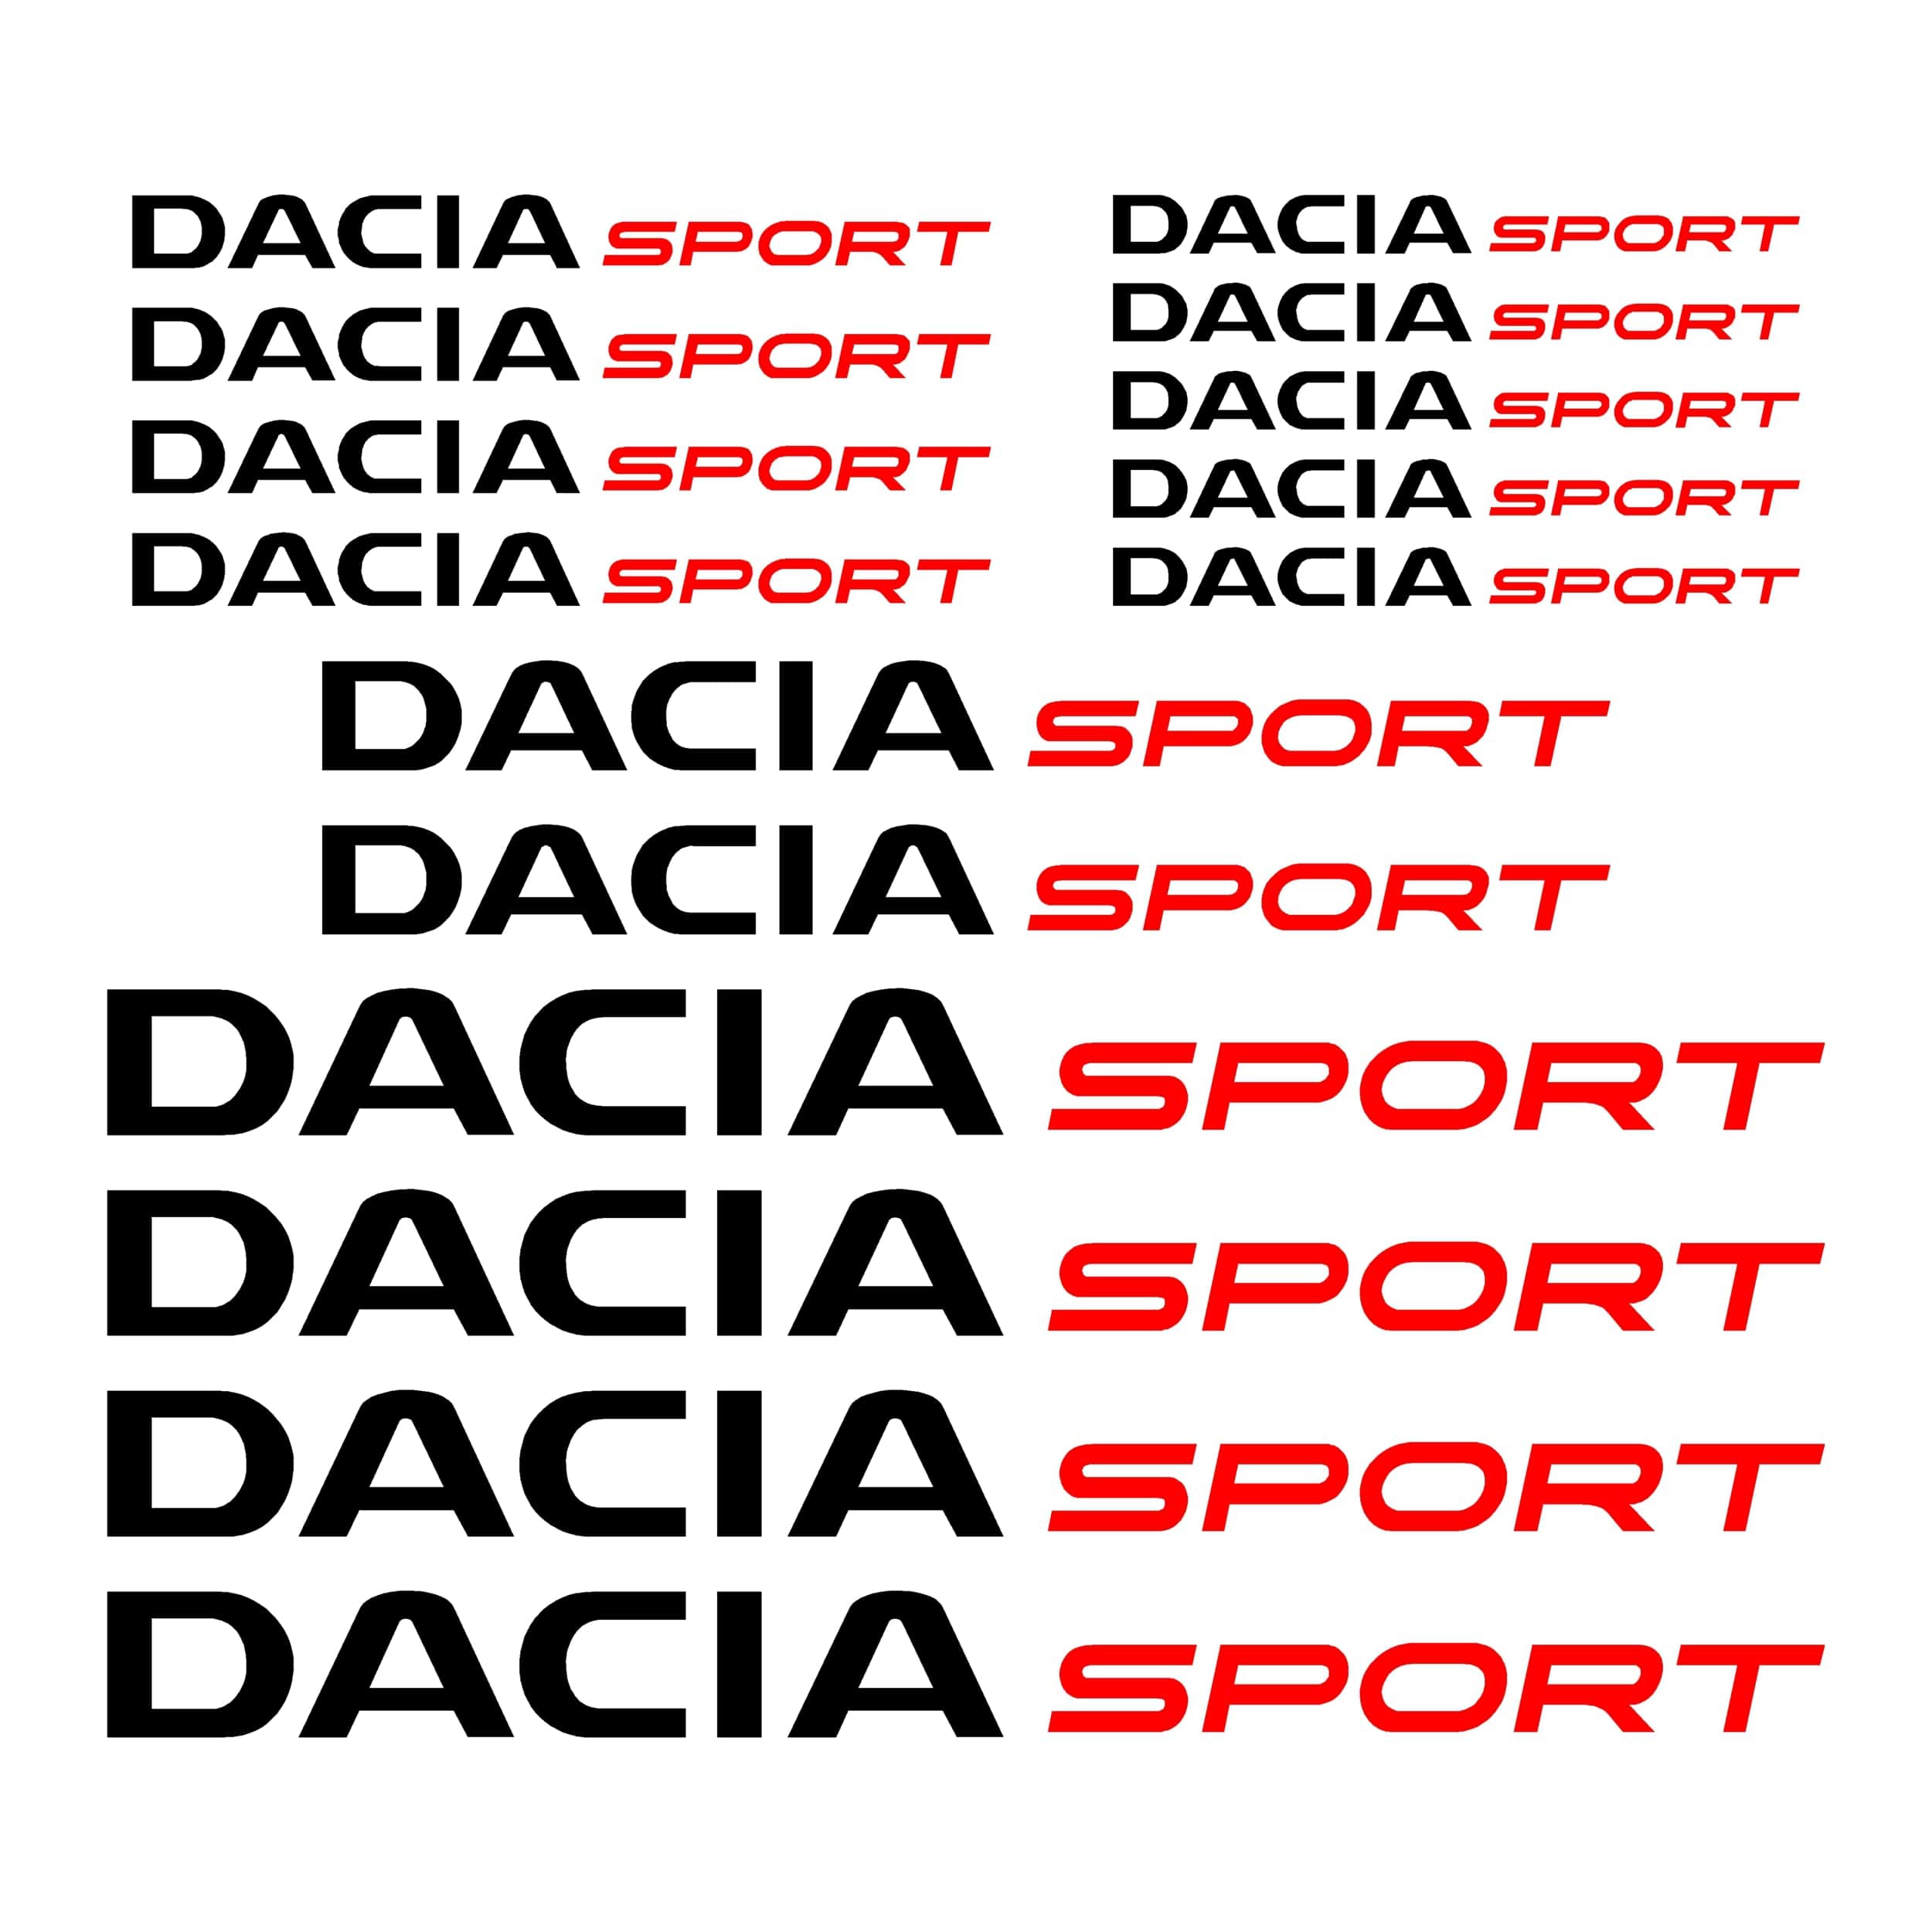 stickers-dacia-sport-ref-34-auto-sport-racing-tuning-amortisseur-tout-terrain-auto-camion-competition-rallye-autocollant-min